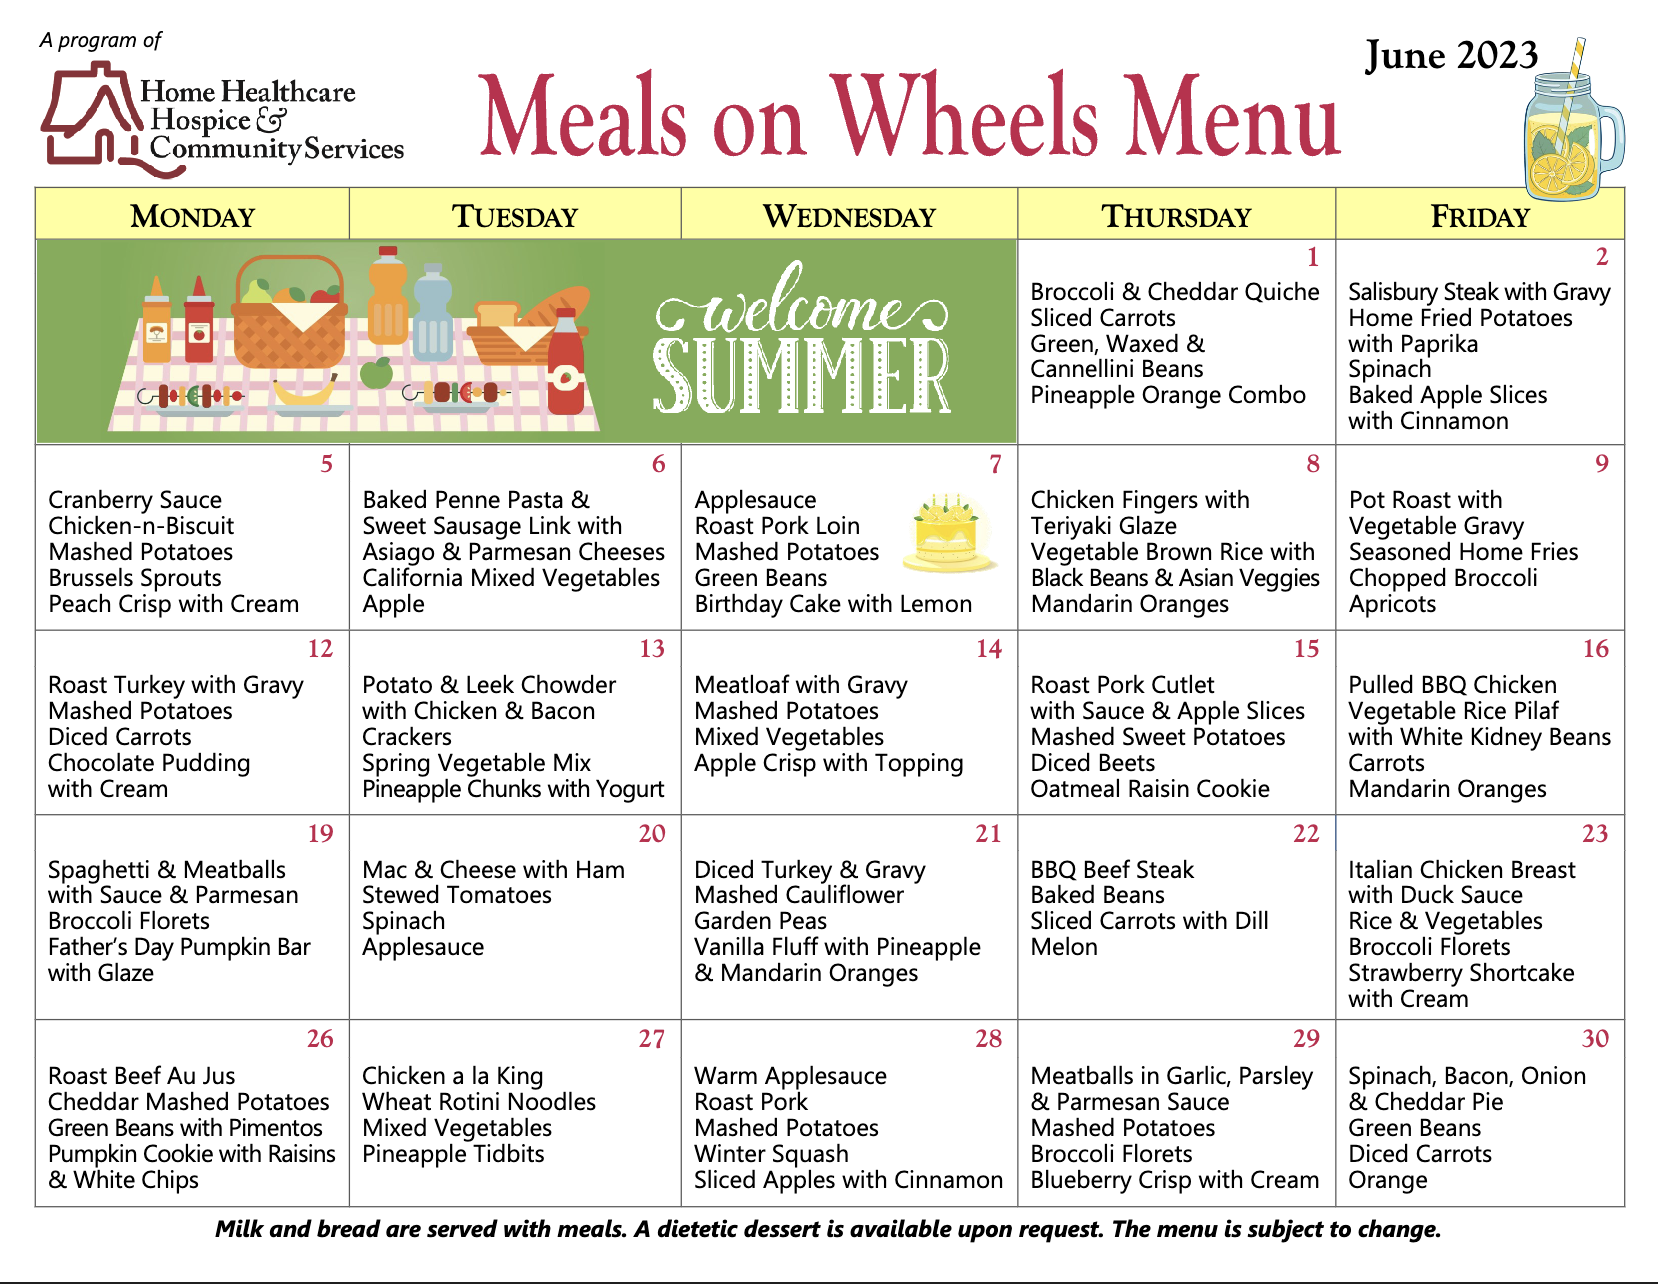 Meals On Wheels Menu for June 2023